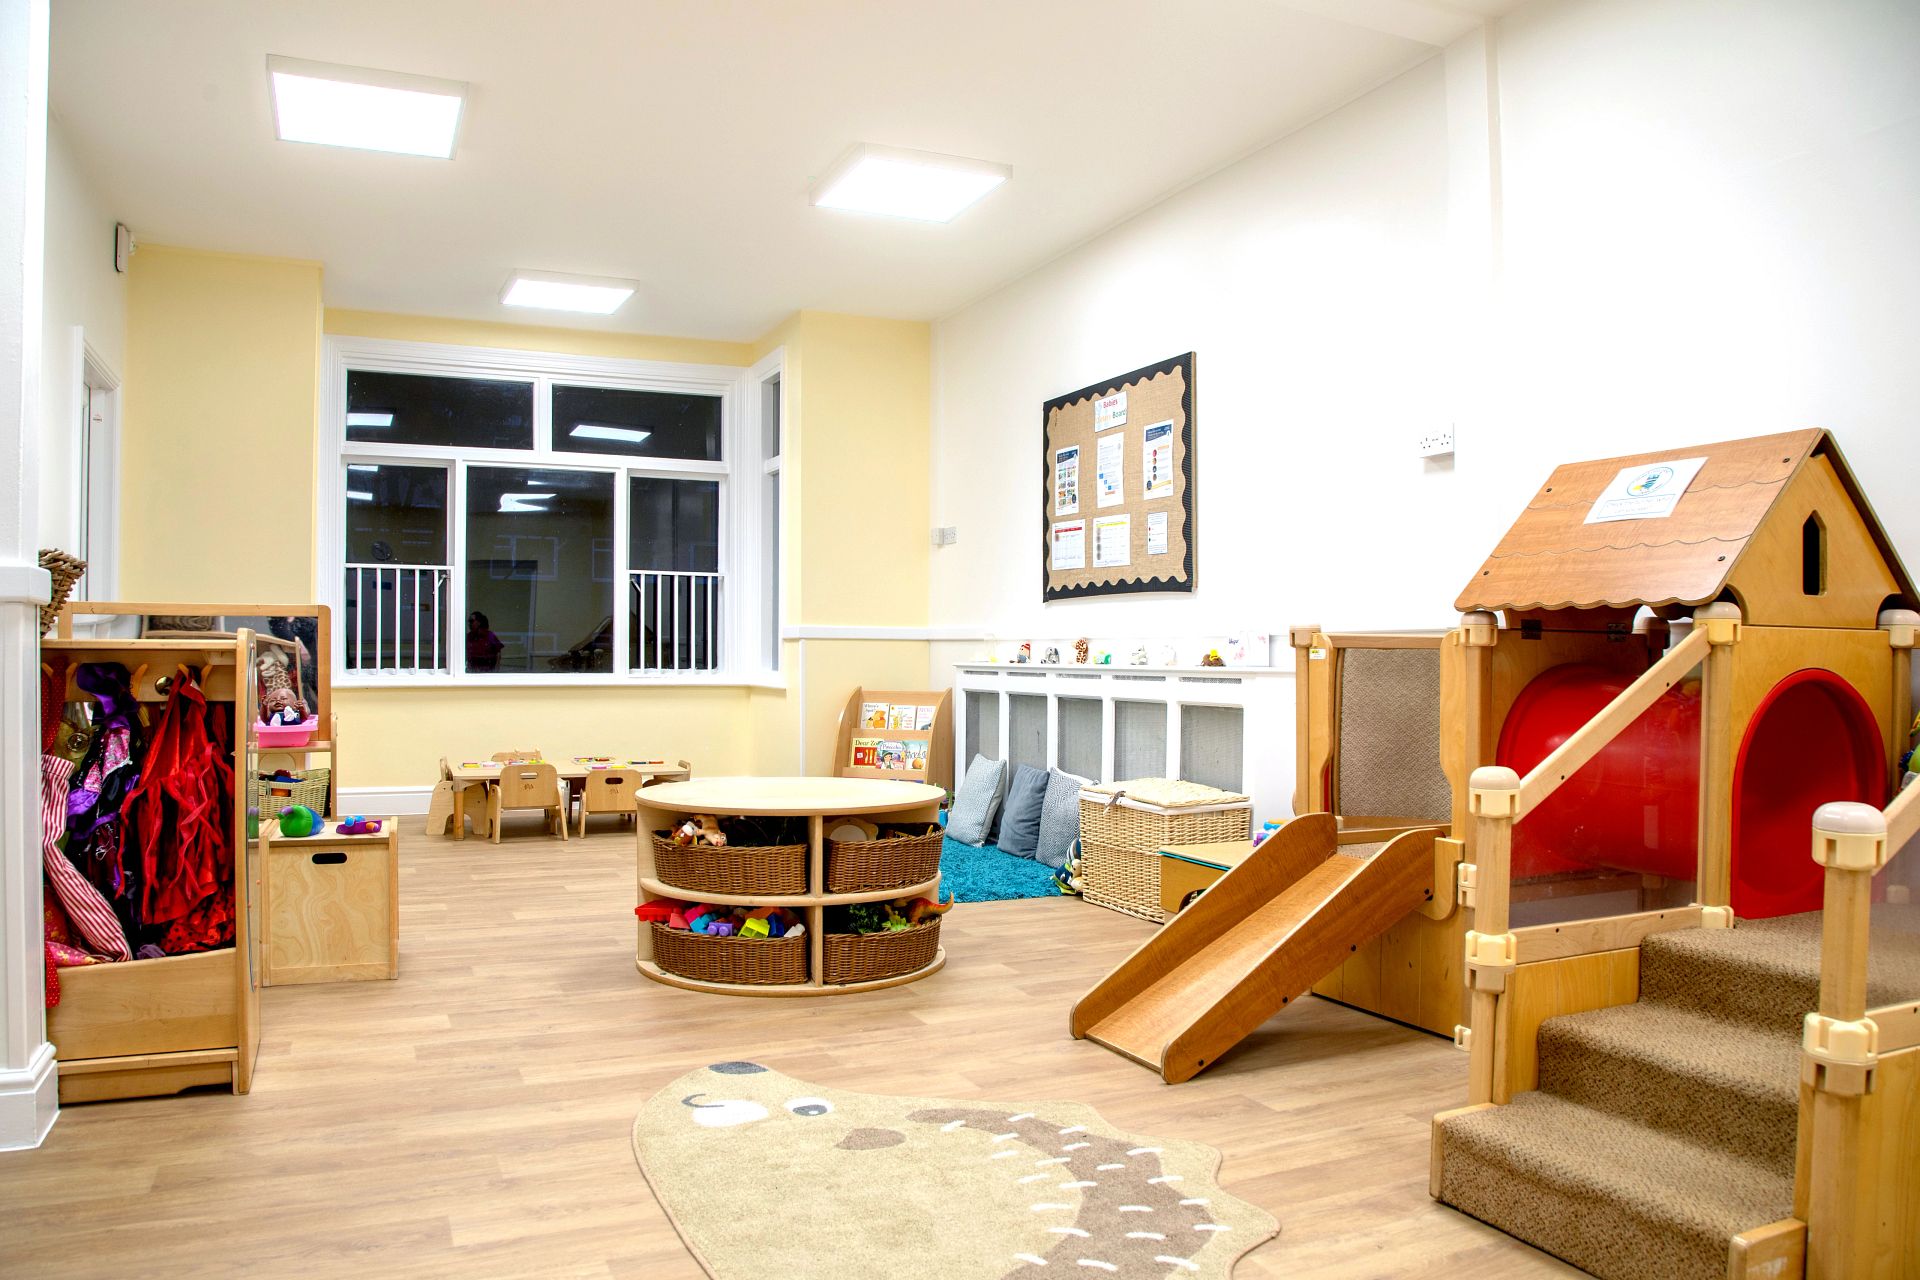 Sutton Day Nursery and Preschool Nursery Image